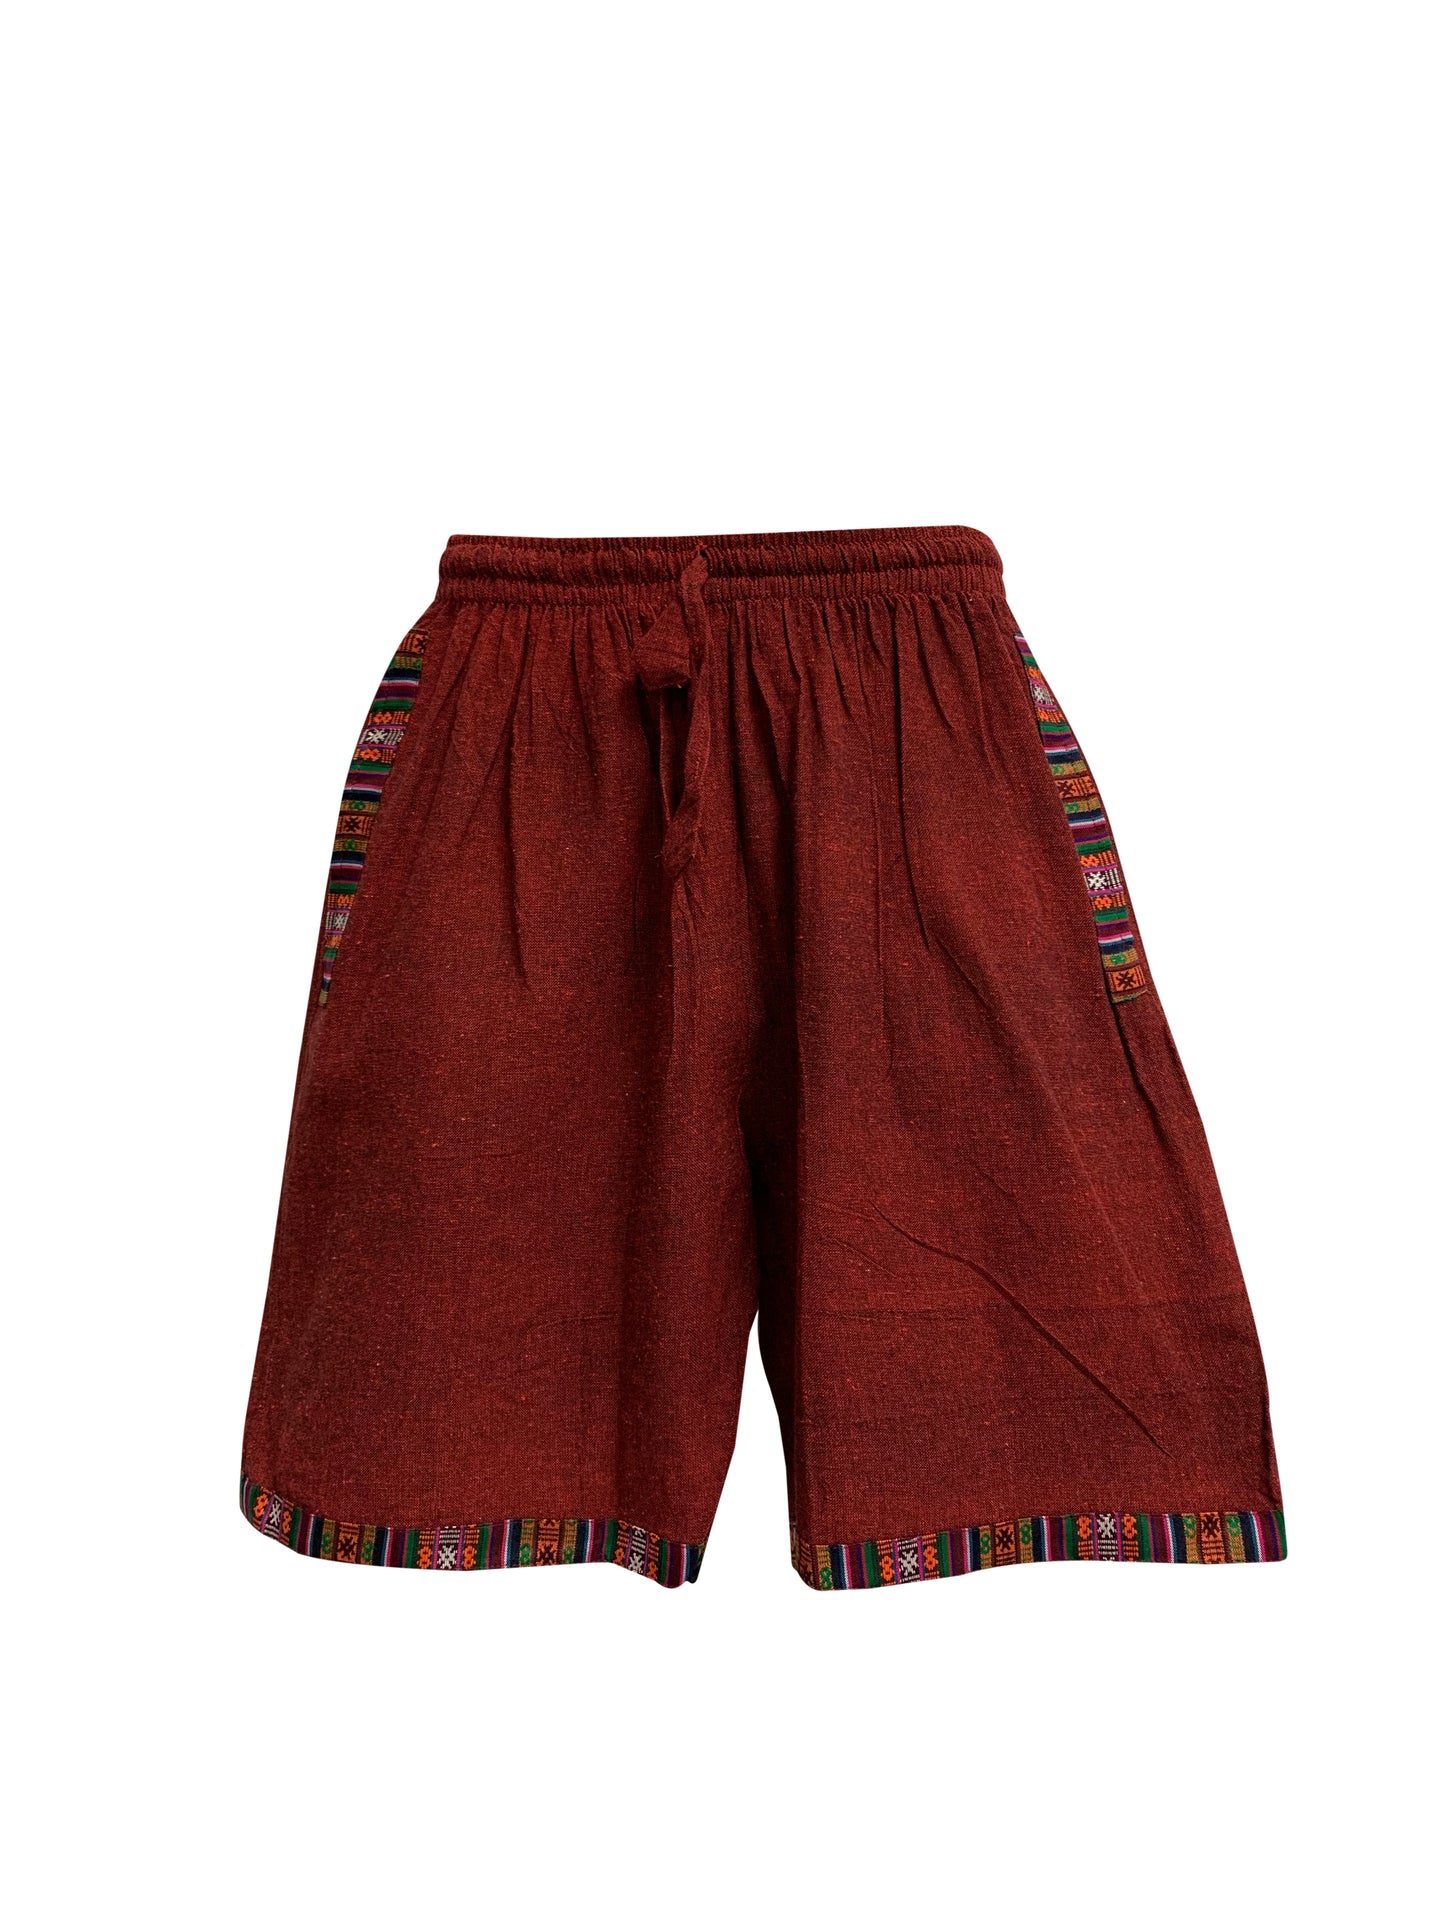 Men's Woven Cotton Elastic Drawstring Three-Pocket Ethnic Print Shorts